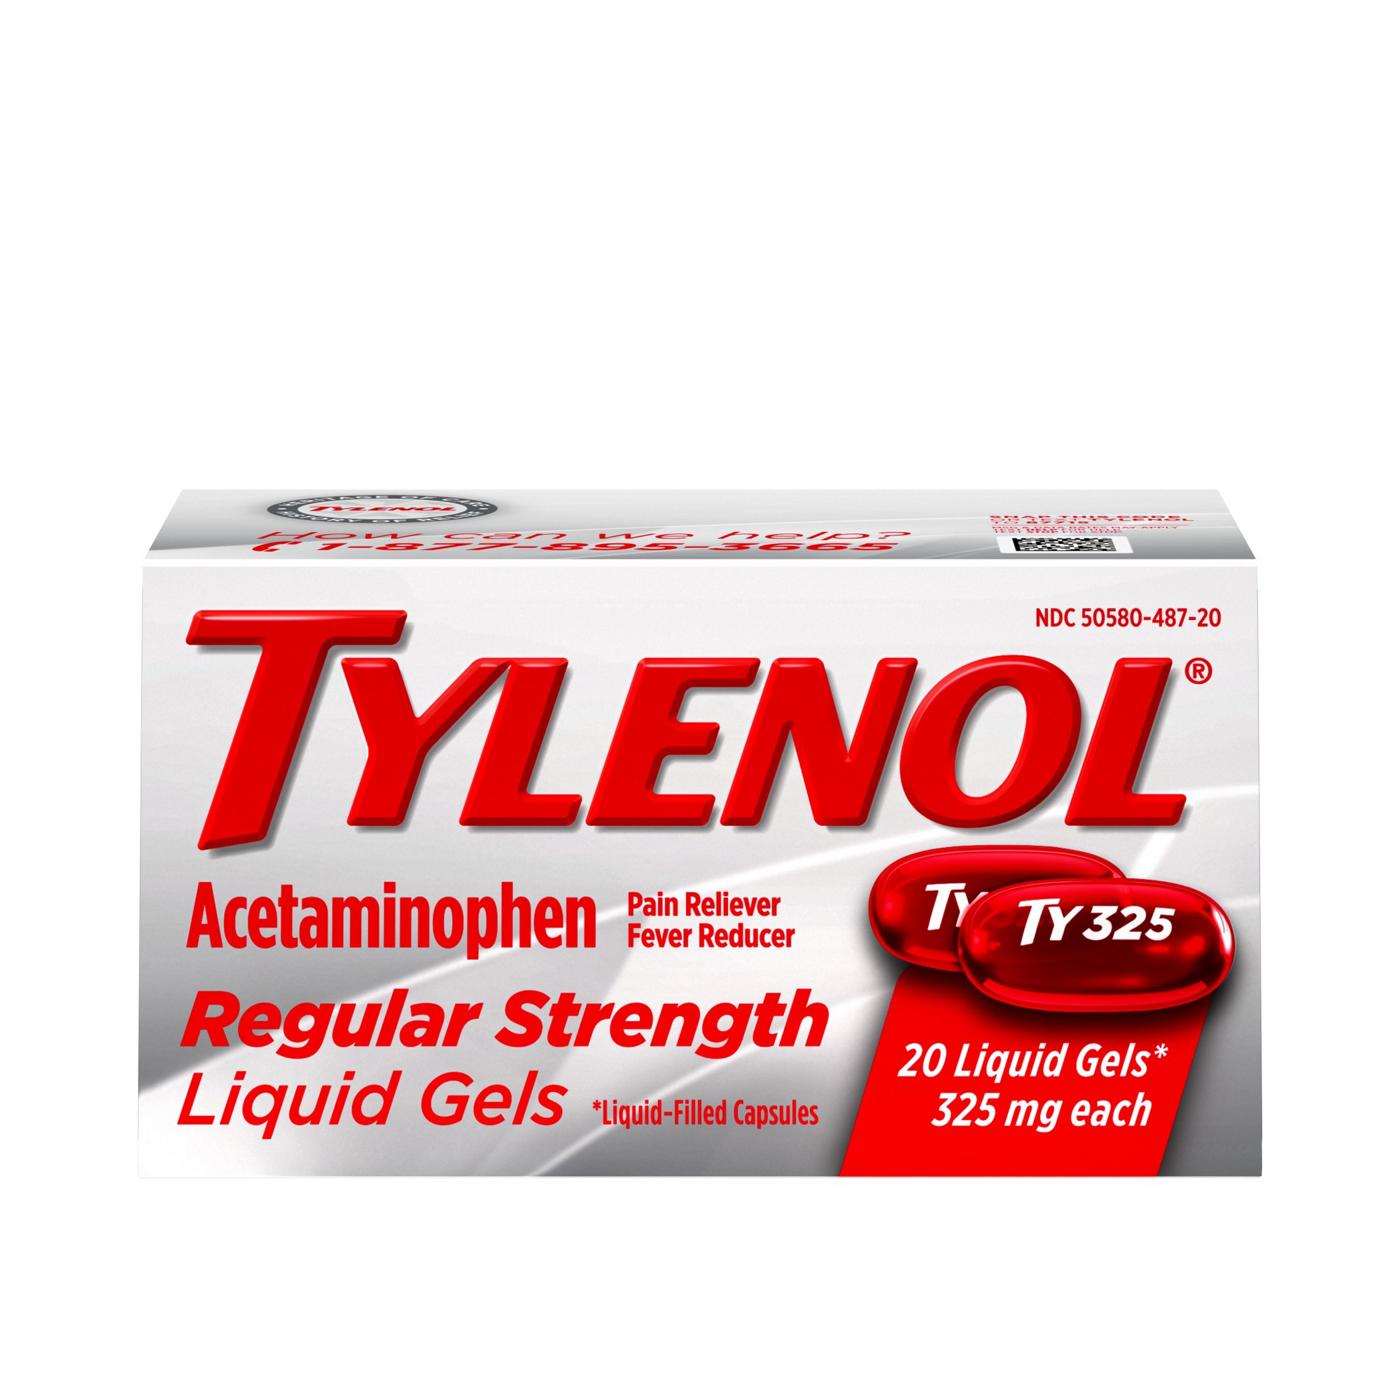 Tylenol Regular Strength Liquid Gels; image 1 of 3